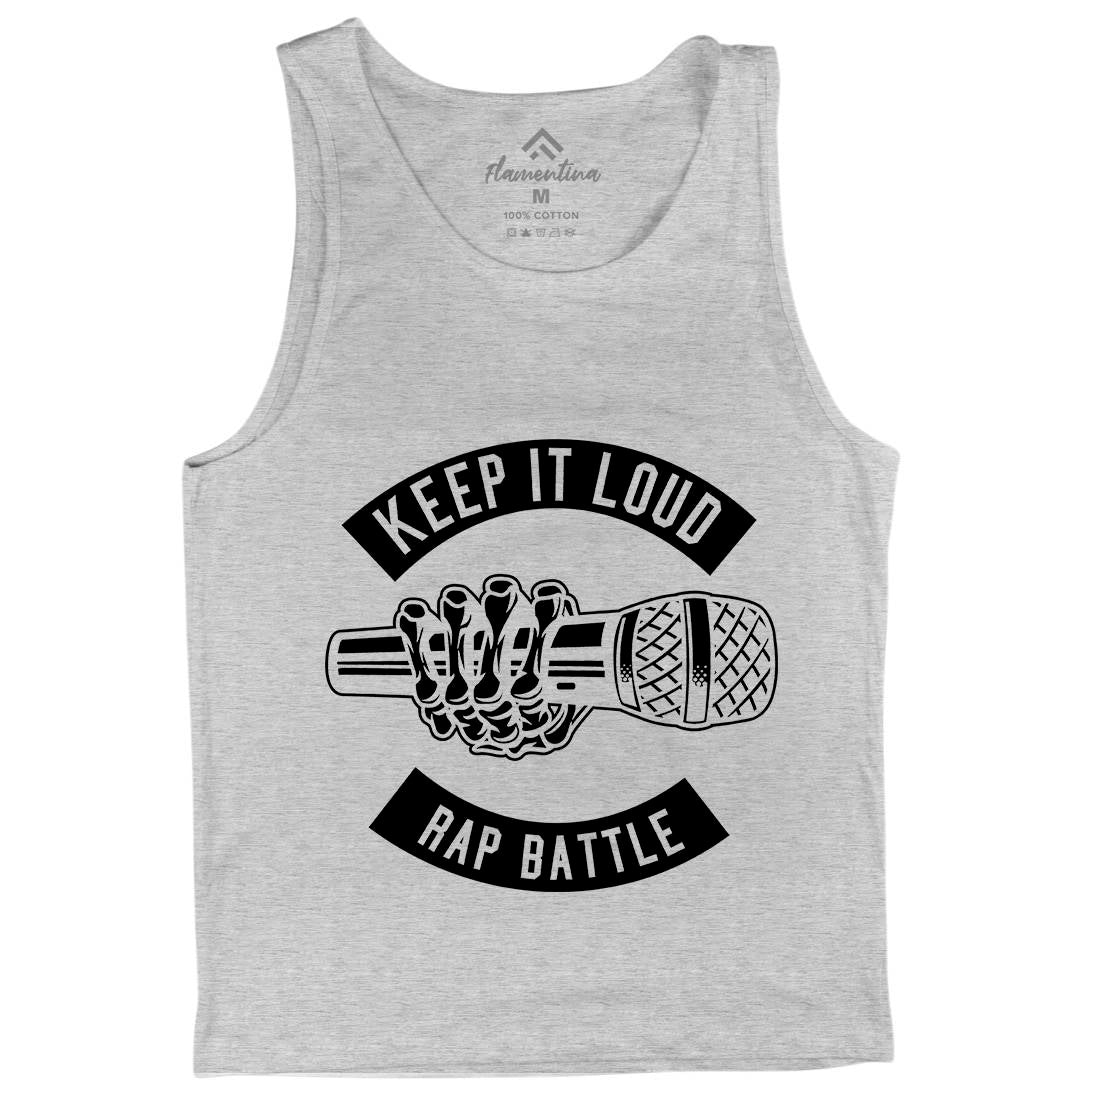 Keep It Loud Mens Tank Top Vest Music B568